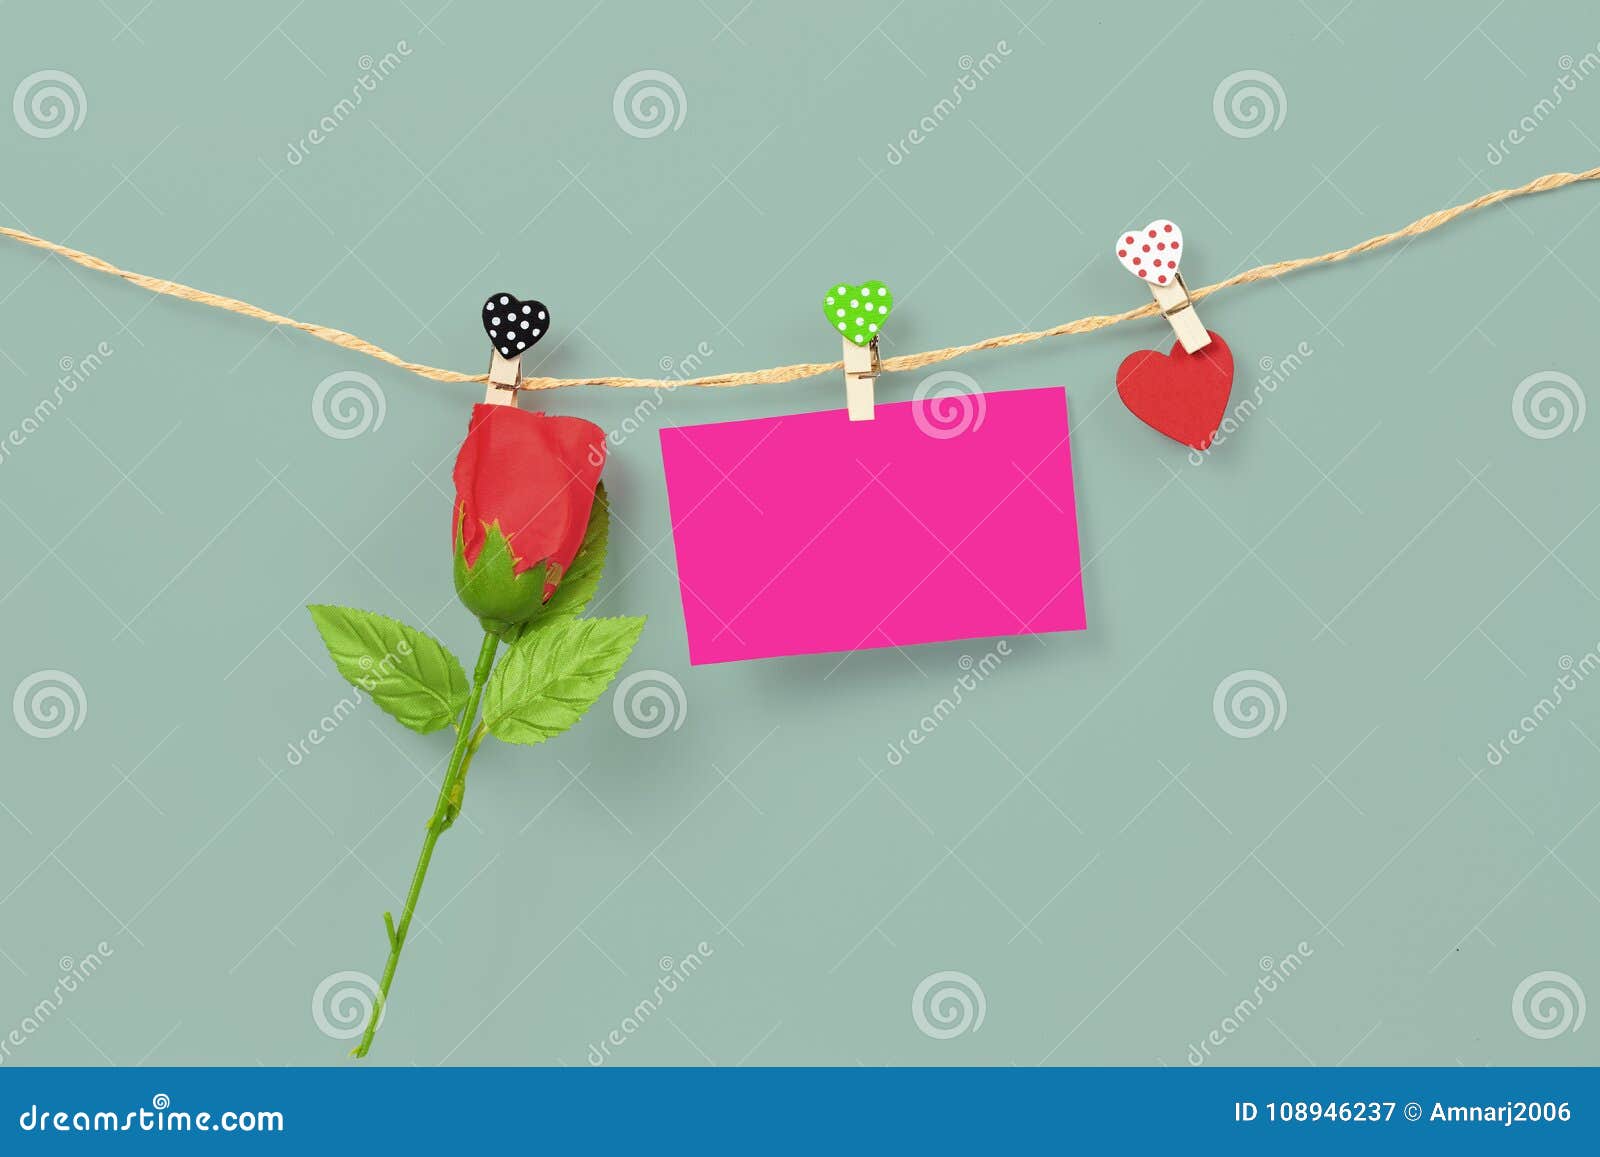 Handmade Wood Hearts Hanging on Cloth Line Stock Image - Image of